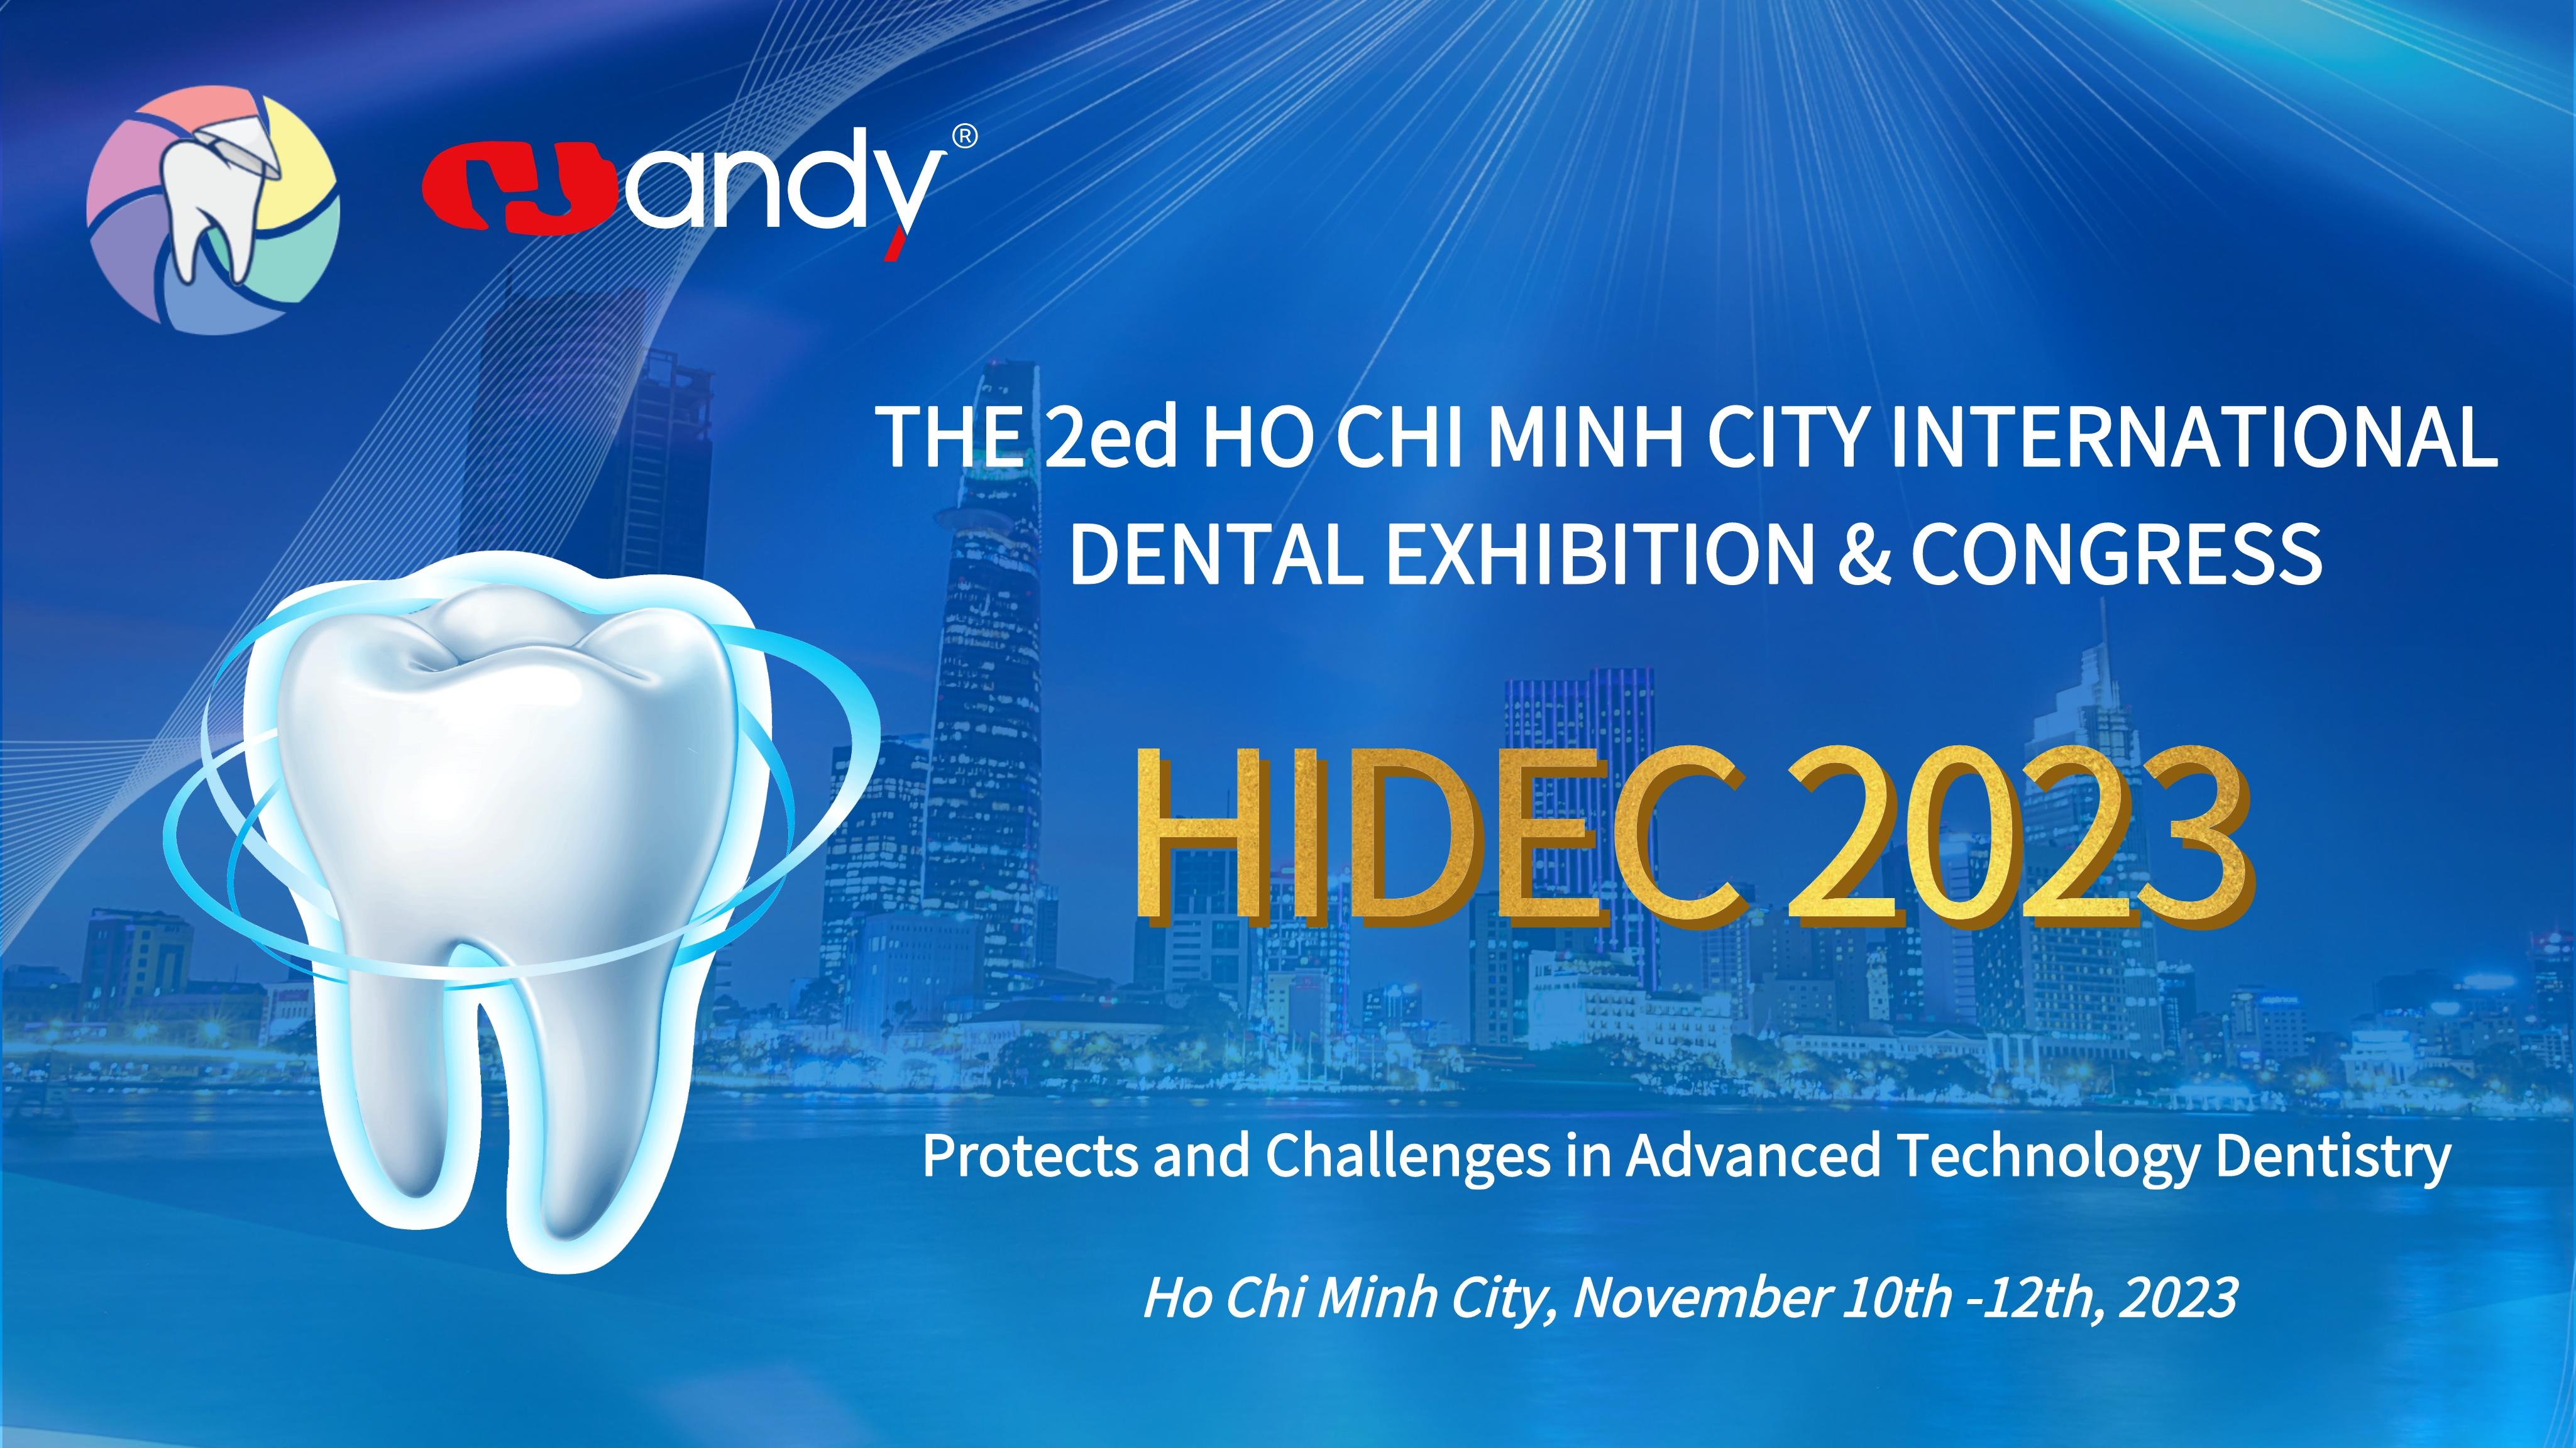 The 2nd Ho Chi Minh City International Dental Exhibition & Congress 2023